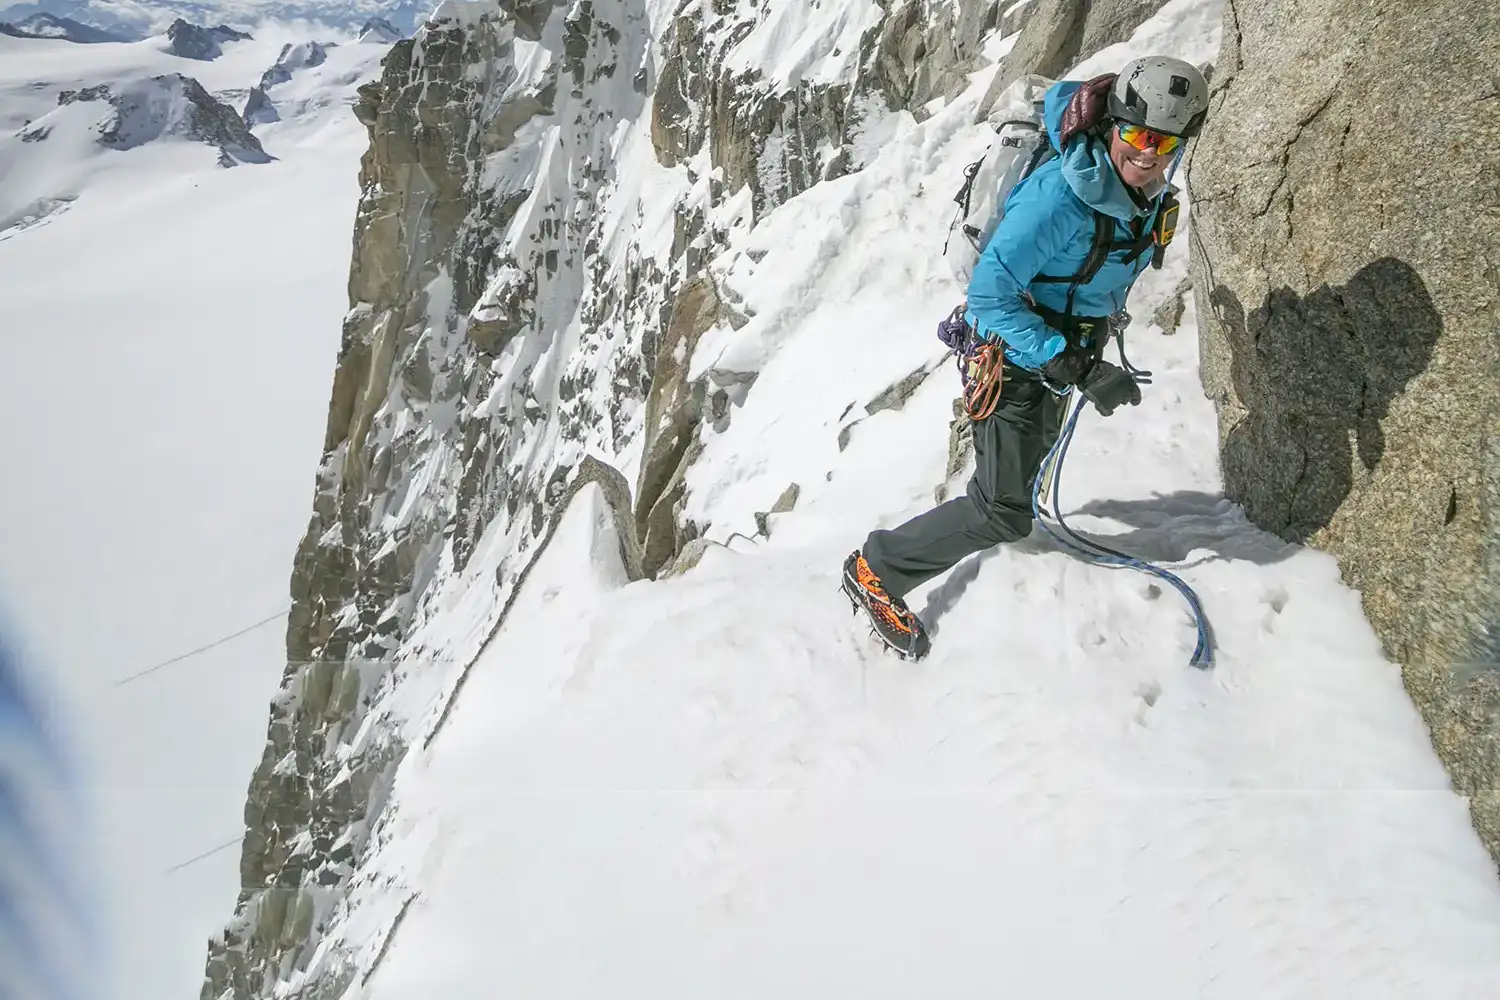 LOWA Ambassador, Sunny Stroeer, mountaineering on snowy ledge